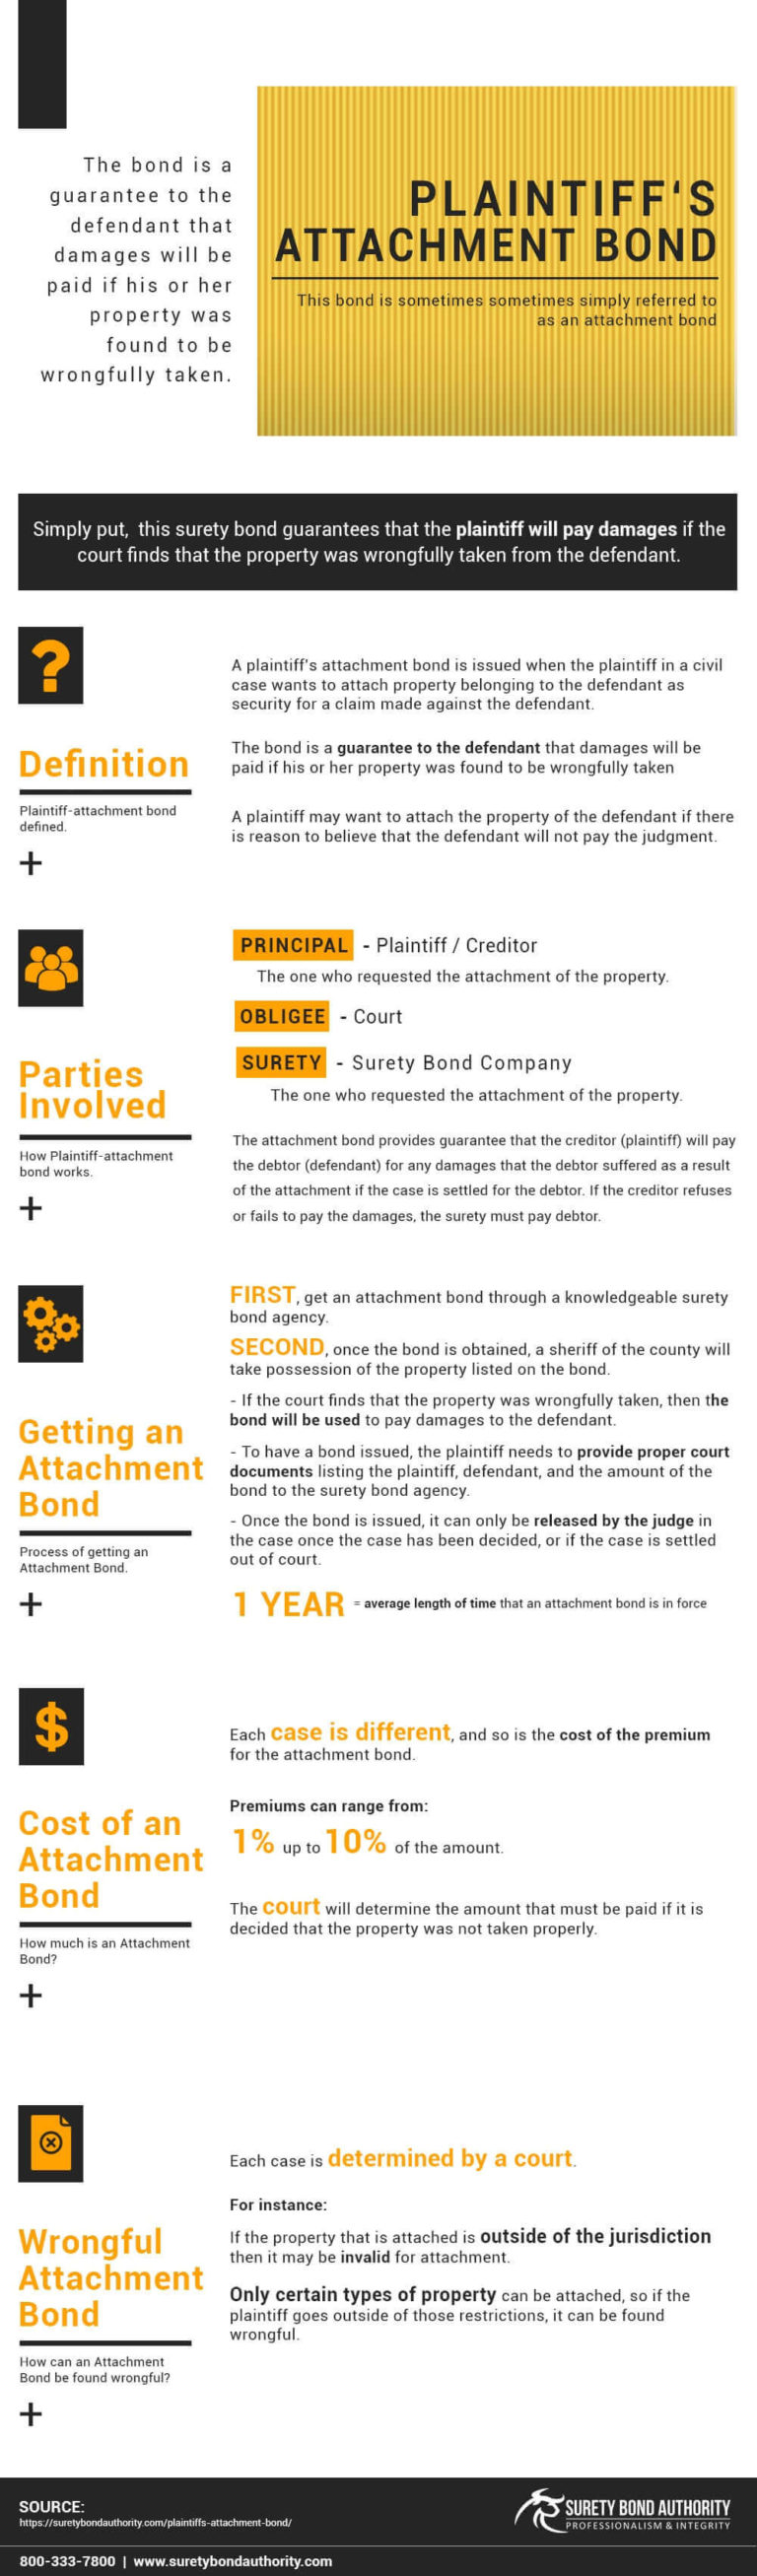 Plaintiff‘s-Attachment Bond Infographic